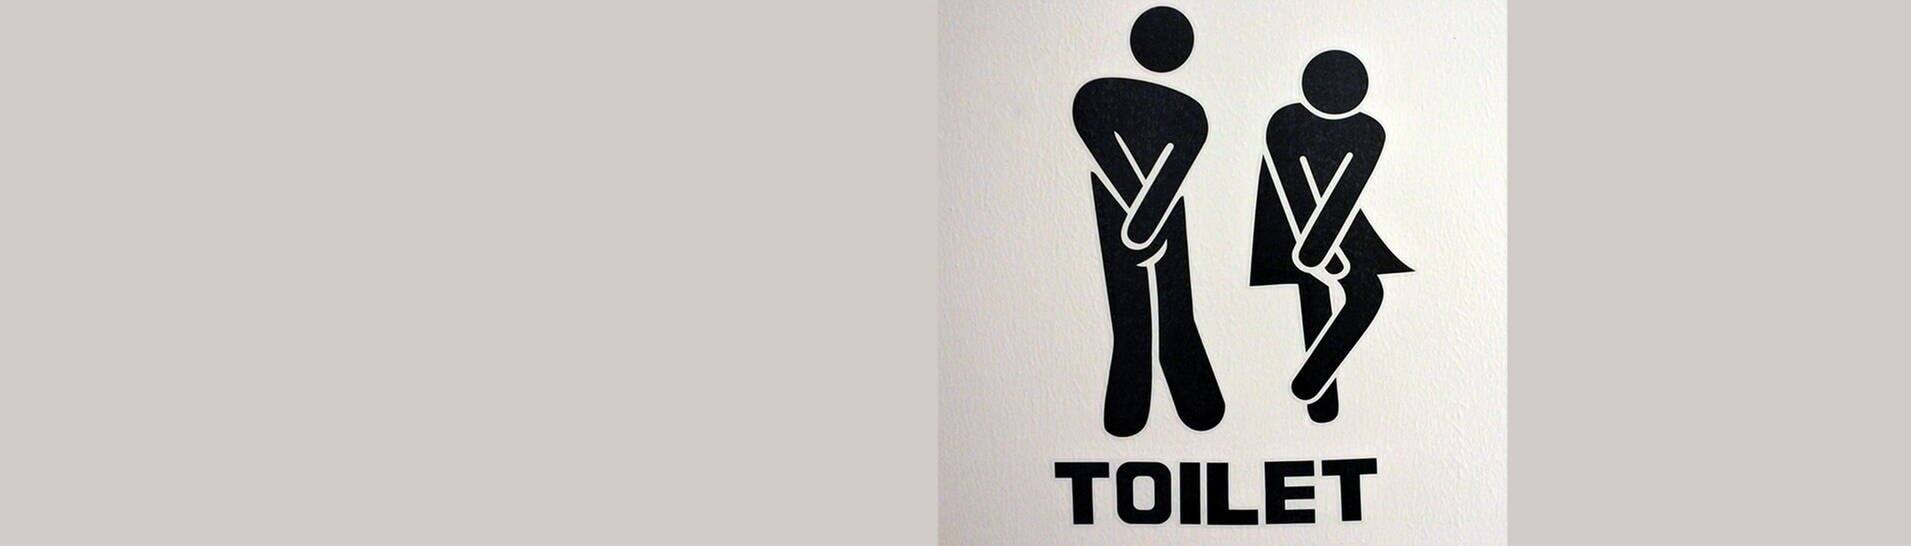 Klo-Schild: Dringend zur Toilette! (Foto: Adobe Stock / Rafael Ben-Ari)